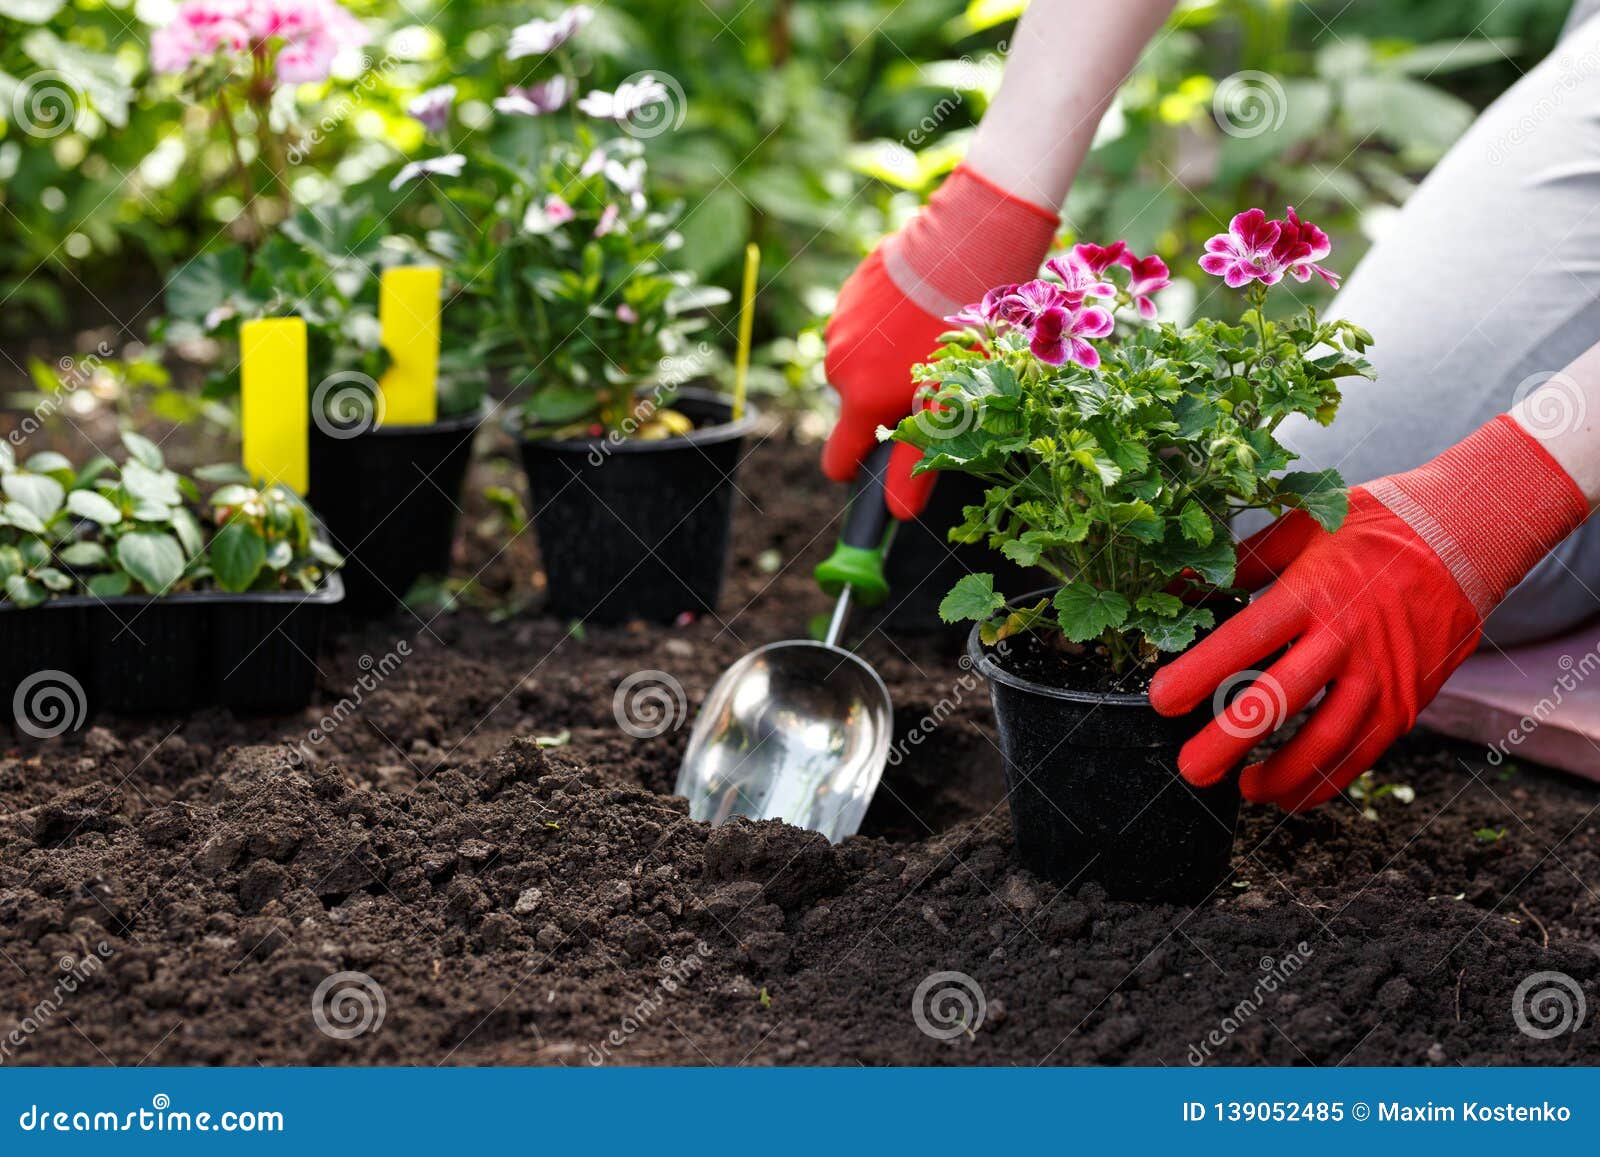 gardener woman planting flowers in her garden, garden maintenance and hobby concept